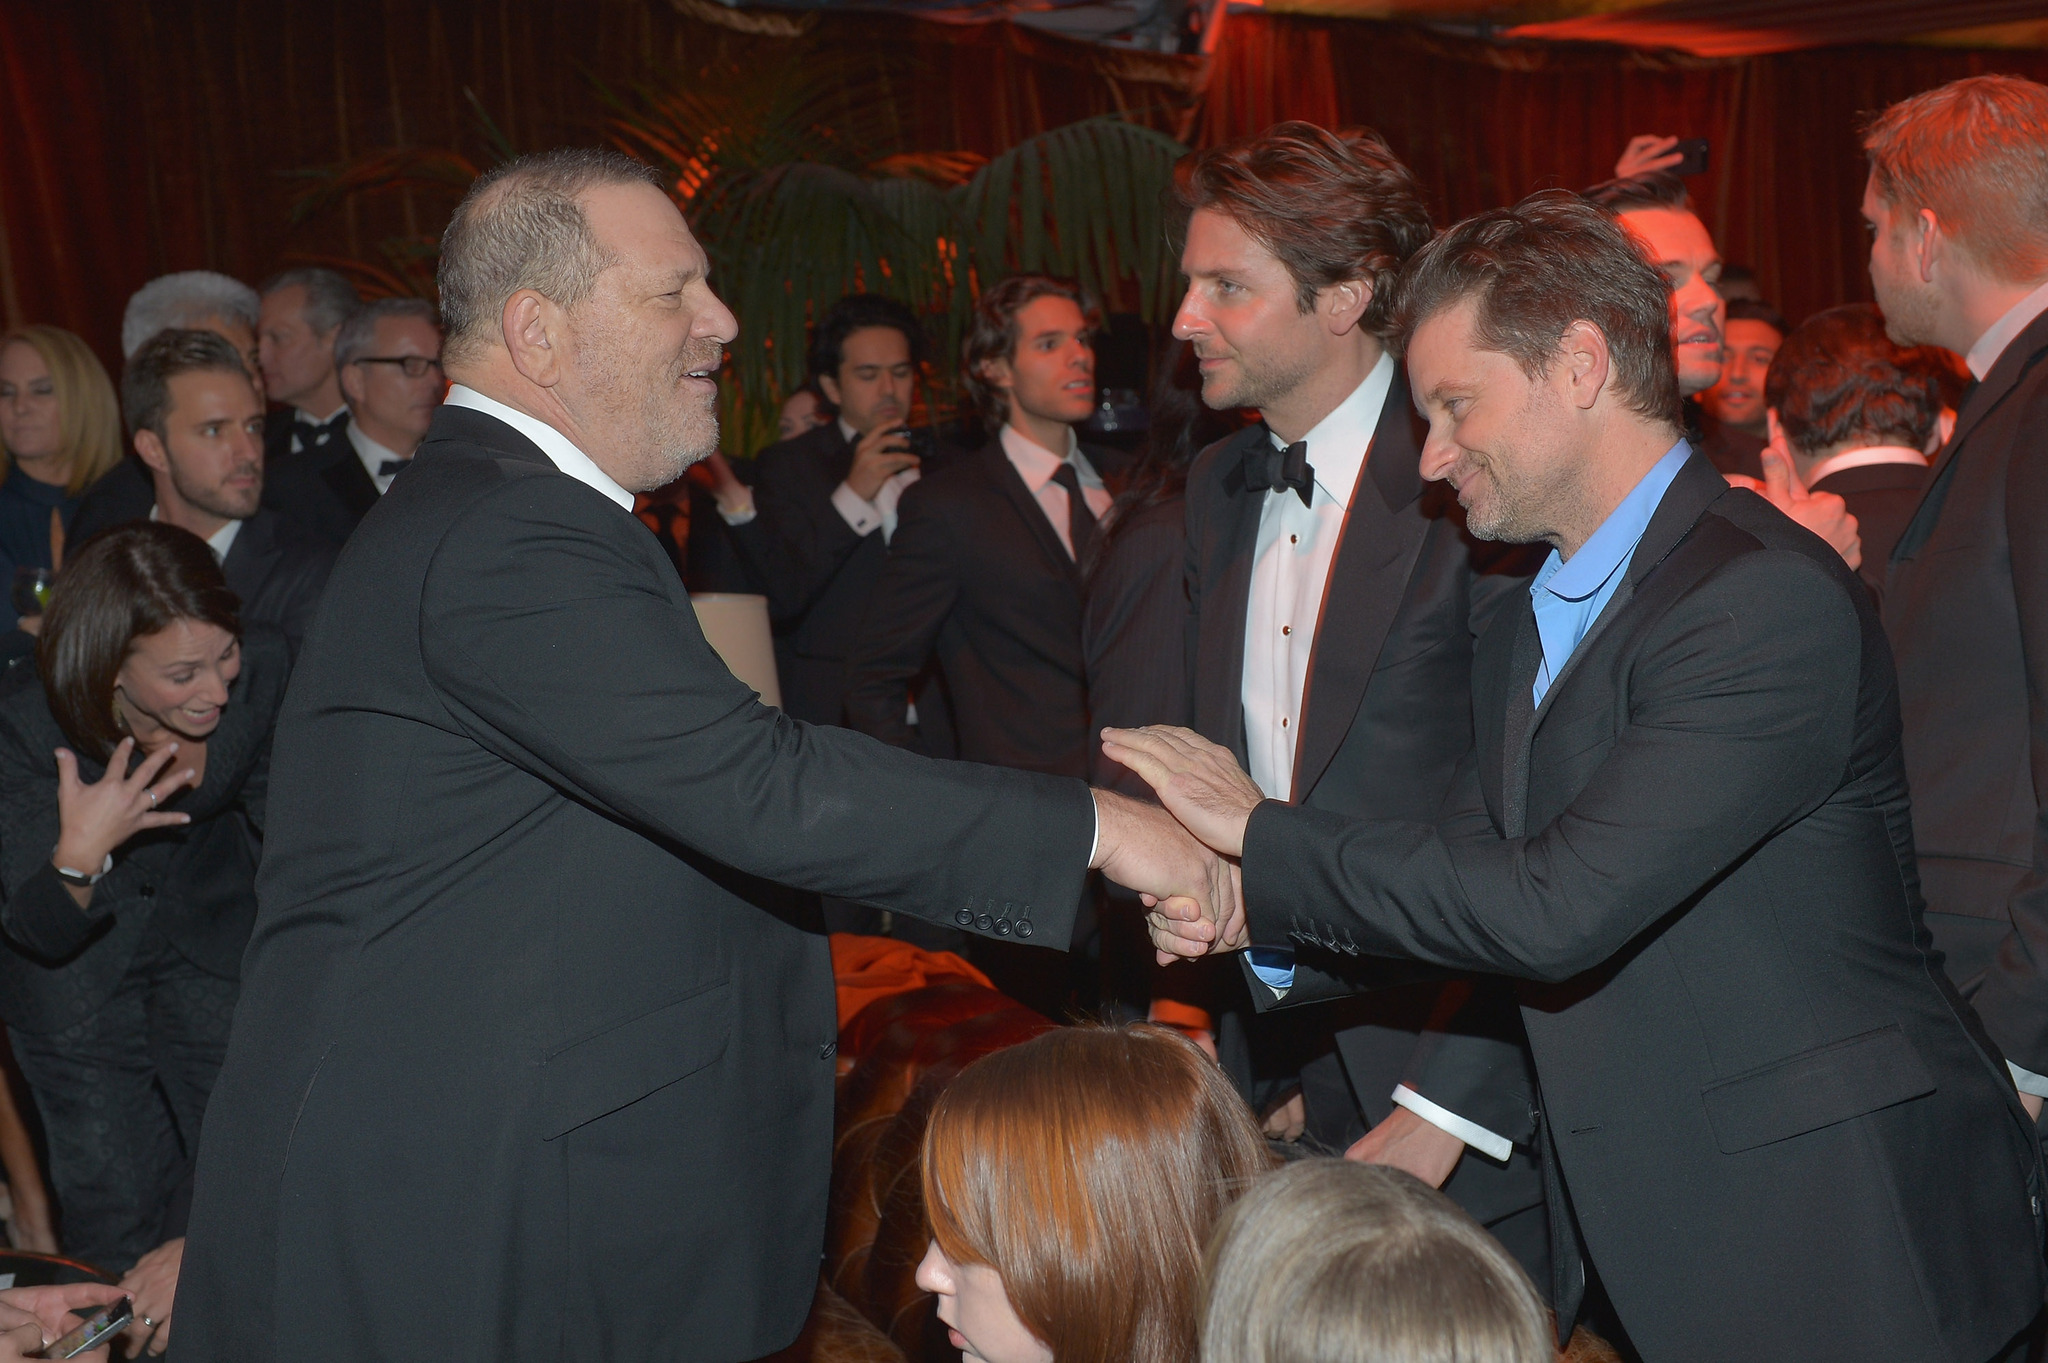 Harvey Weinstein, Bradley Cooper and Shea Whigham